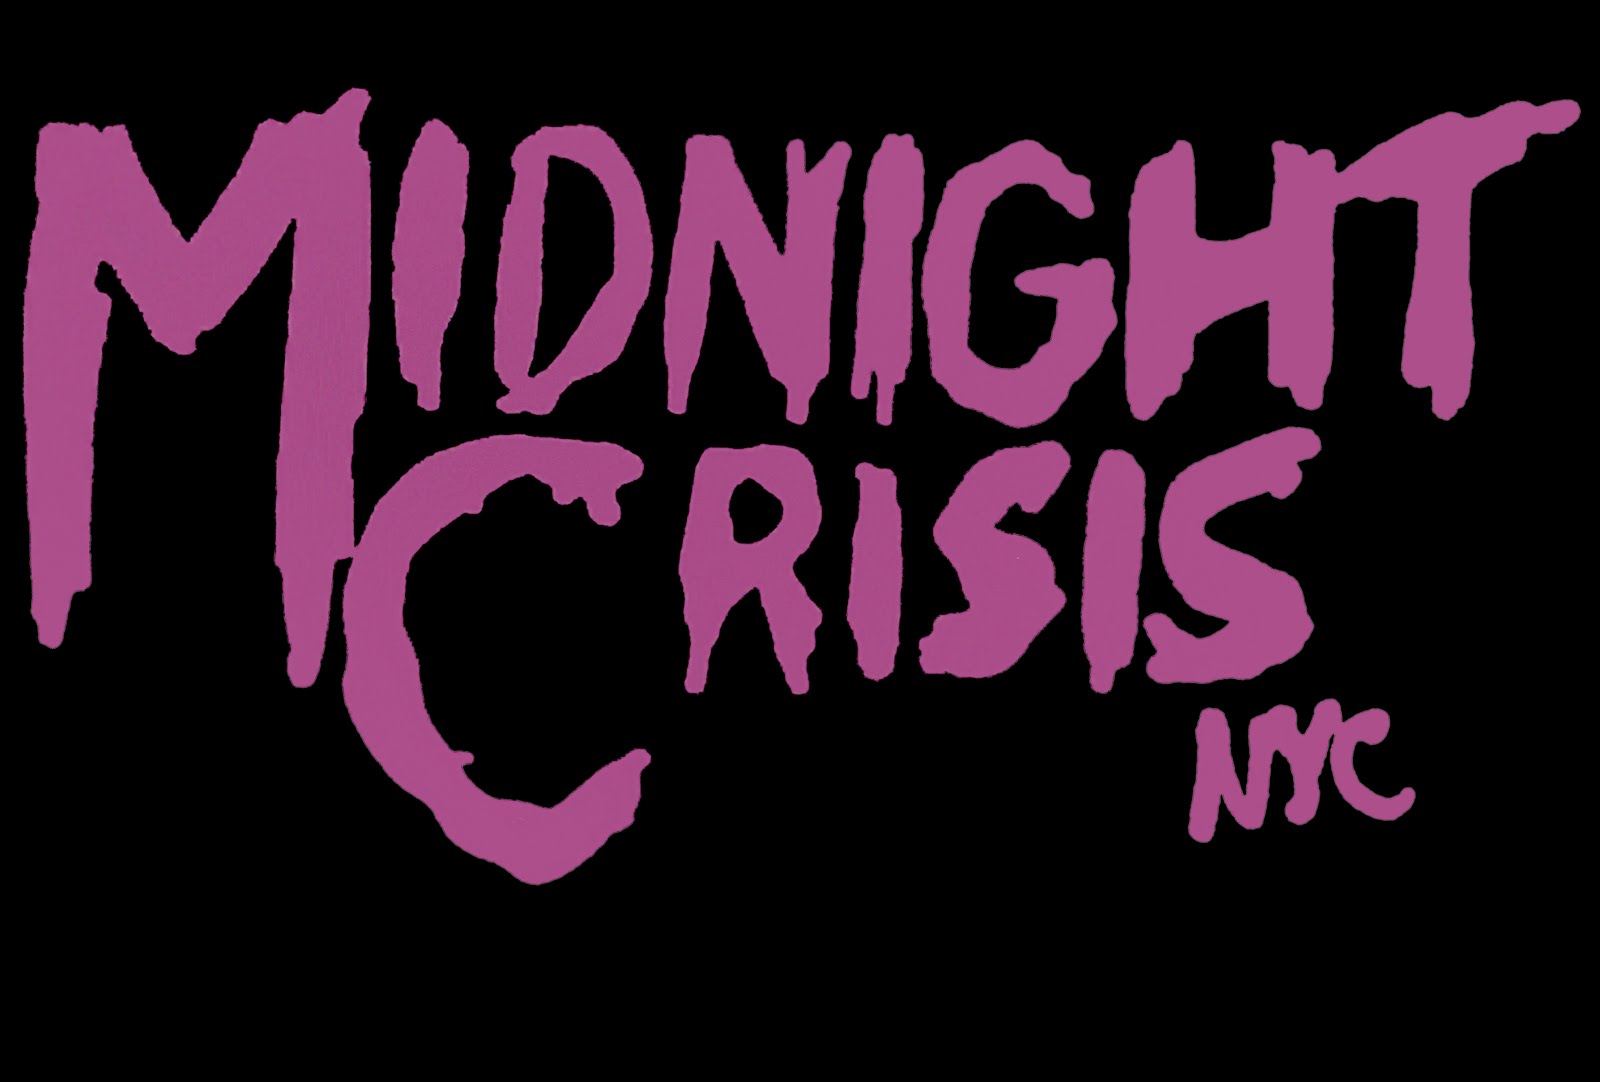 Midnight Crisis (NYC)